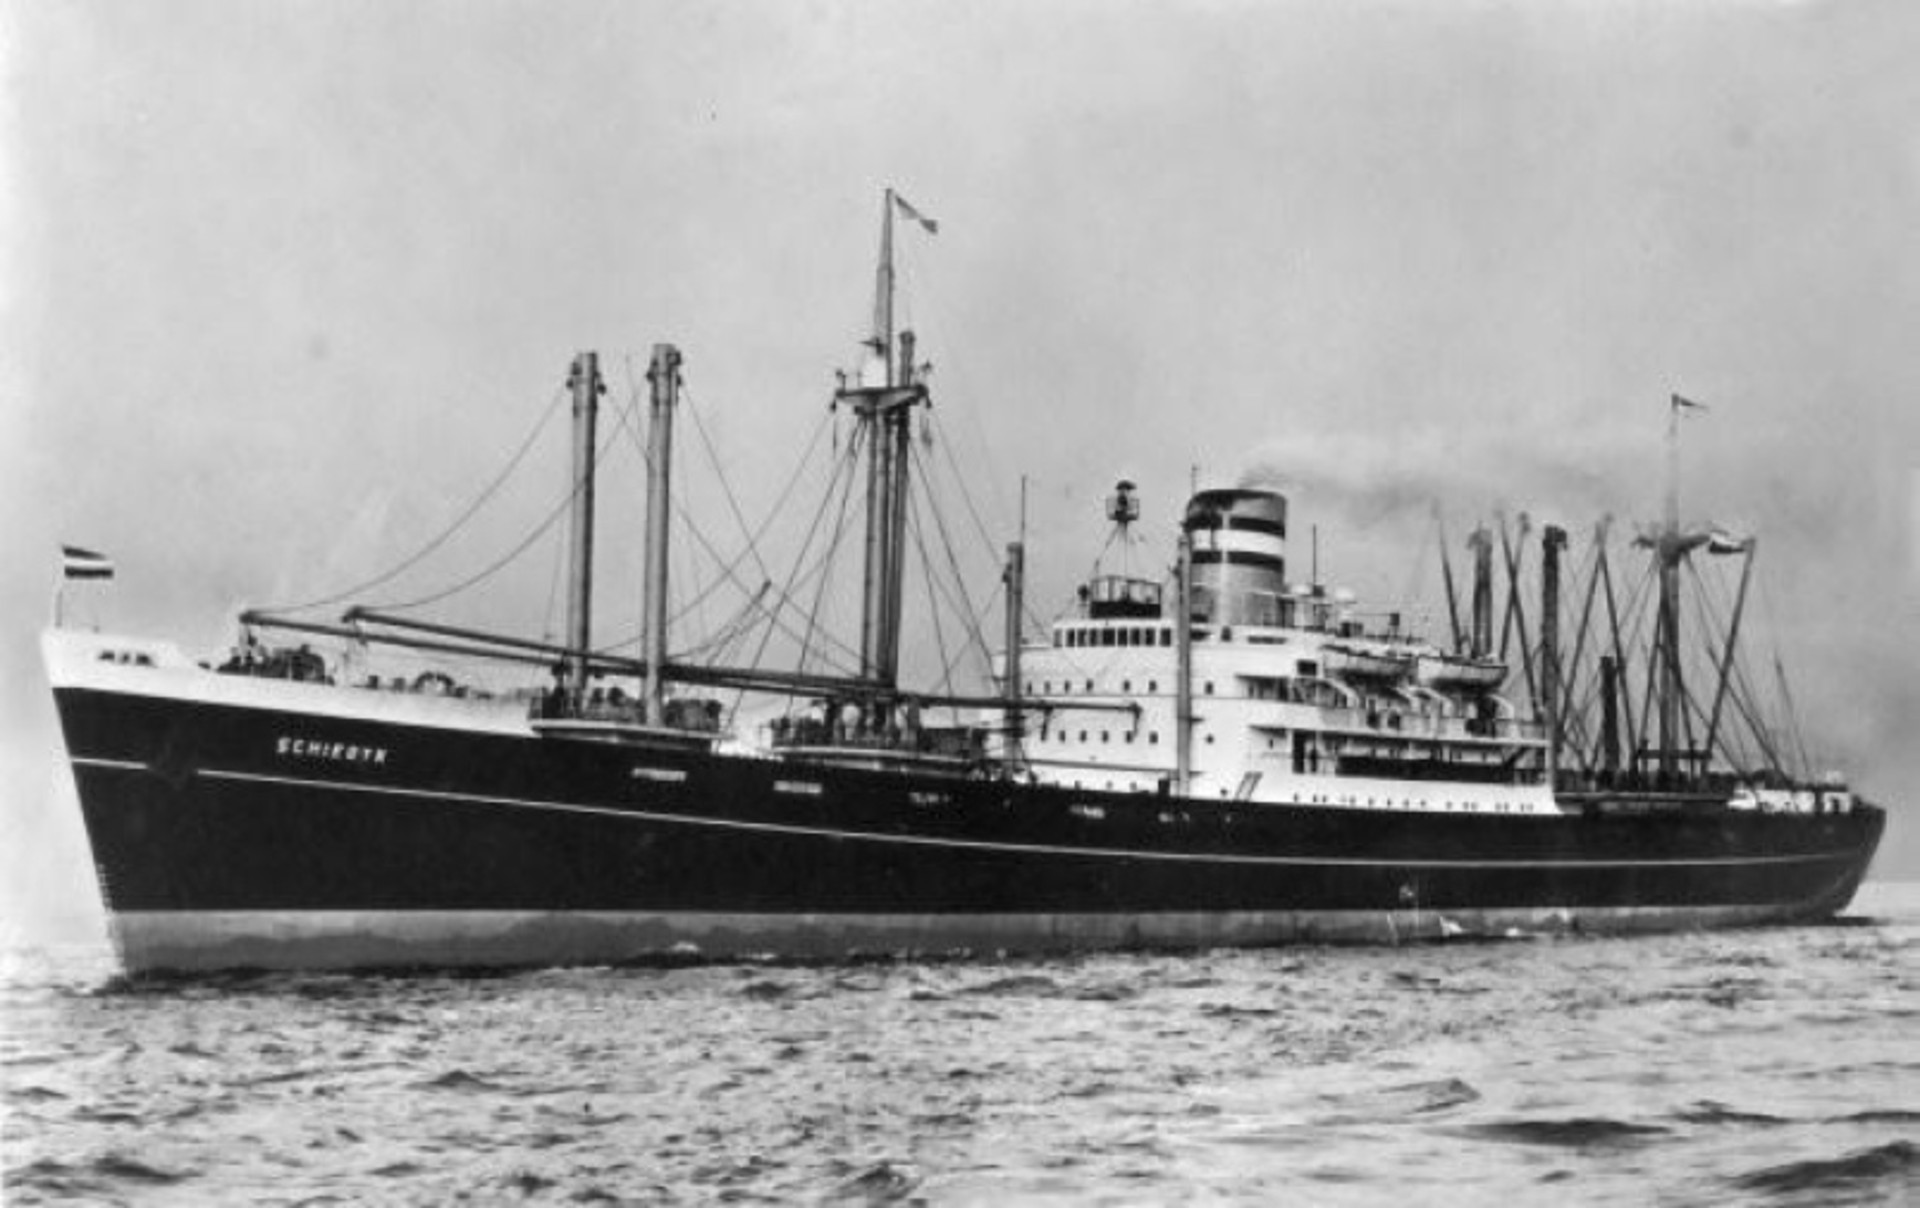 The MV Schiedyk when it was first built in Belfast in 1949